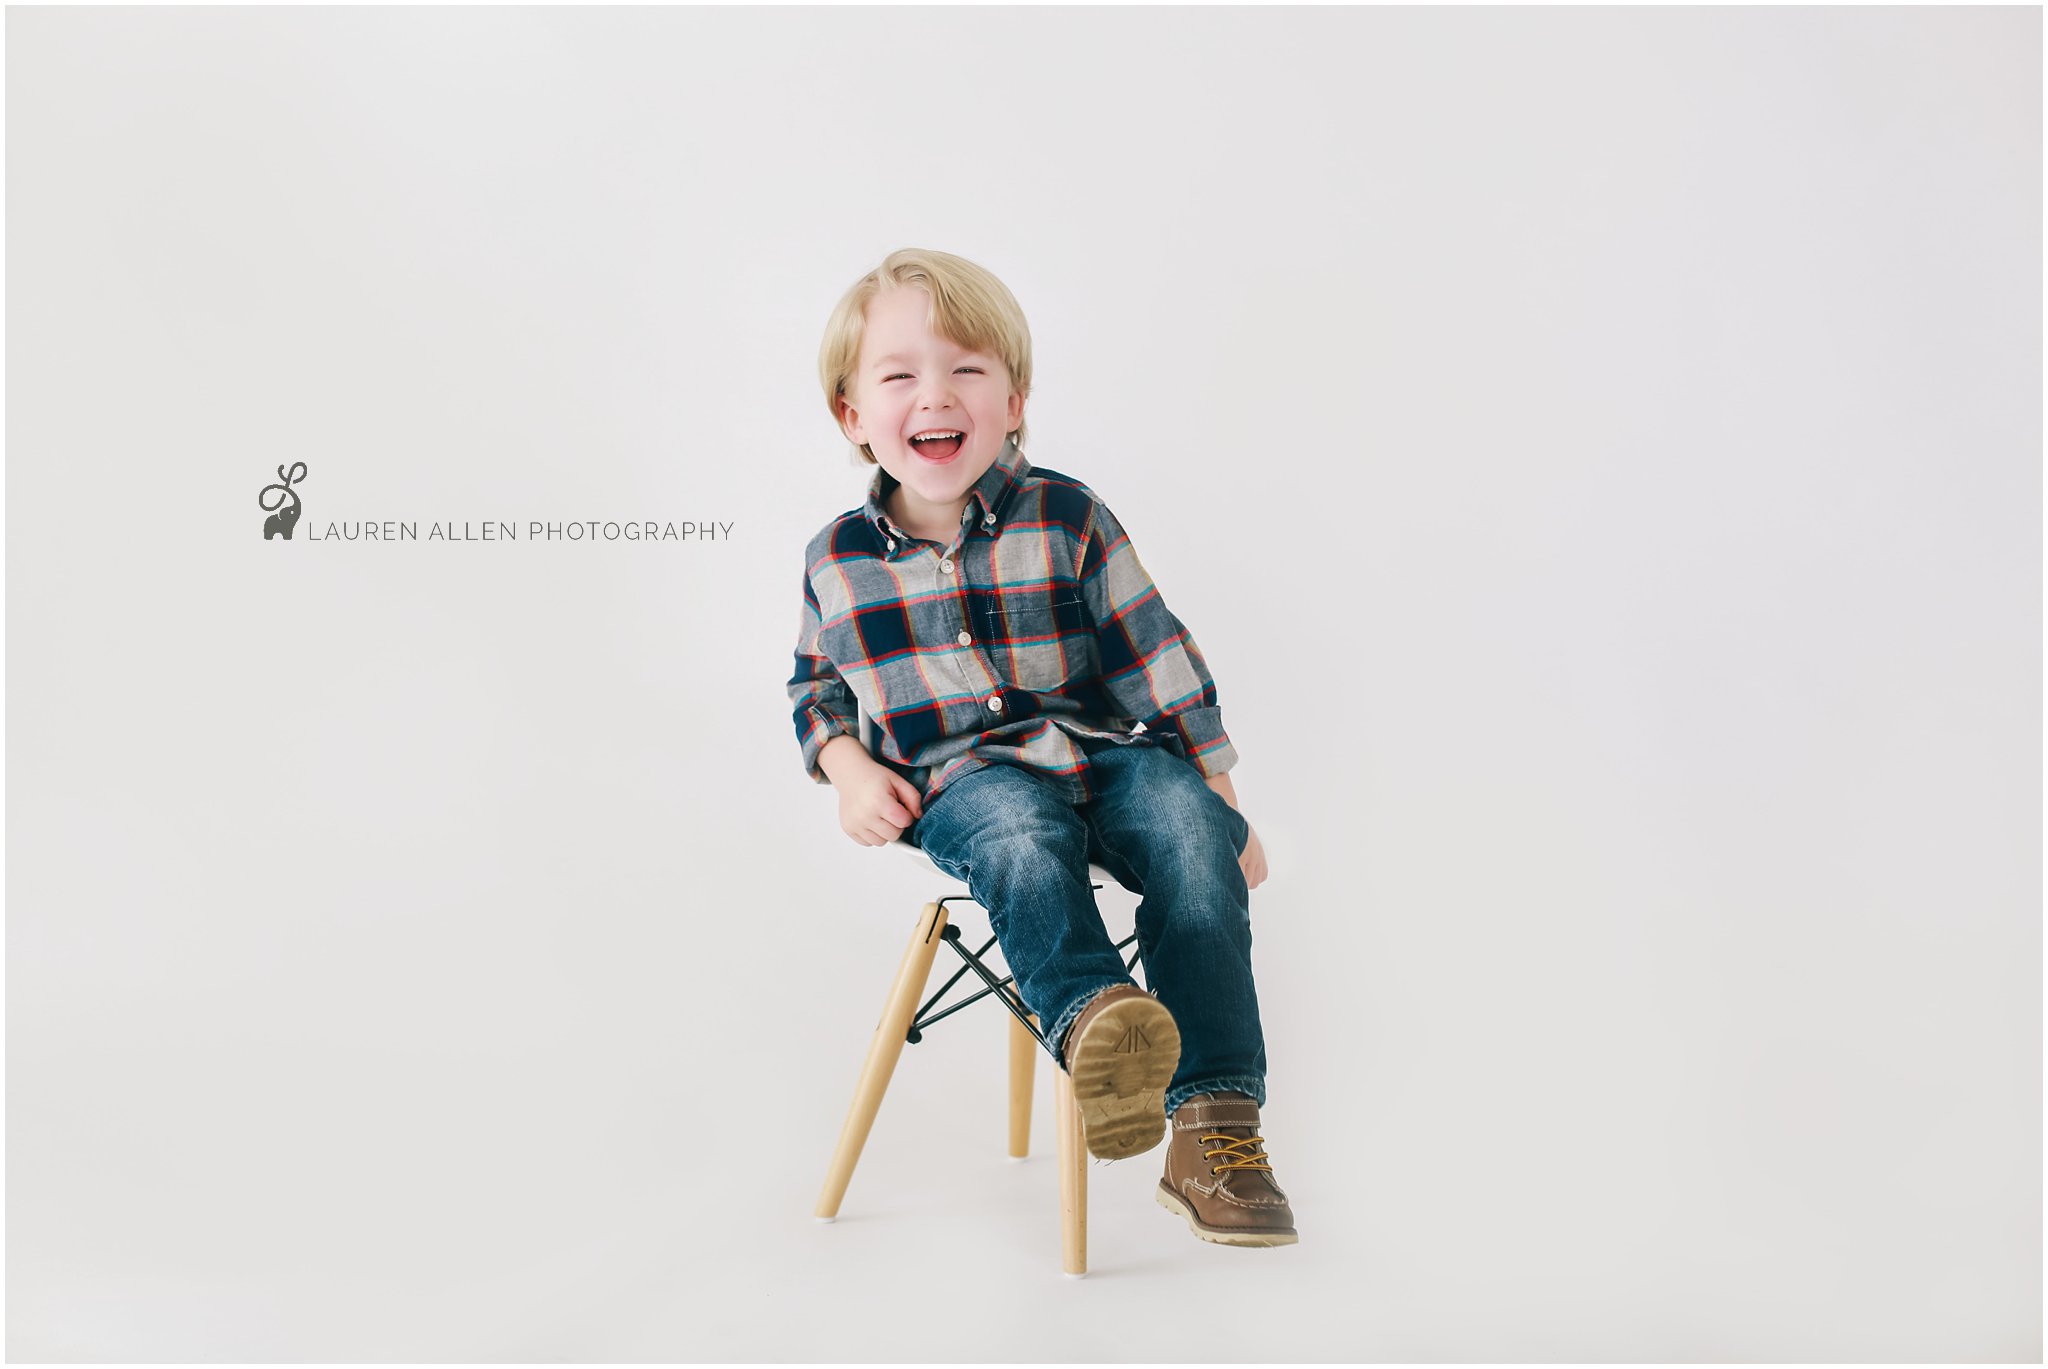 2017,4 years old,Boy,Brady,Children,Inside,Portrait,chair,child,gap,lake oswego,lake oswego studio,playing,strobes,studio,studio lights,white seamless,